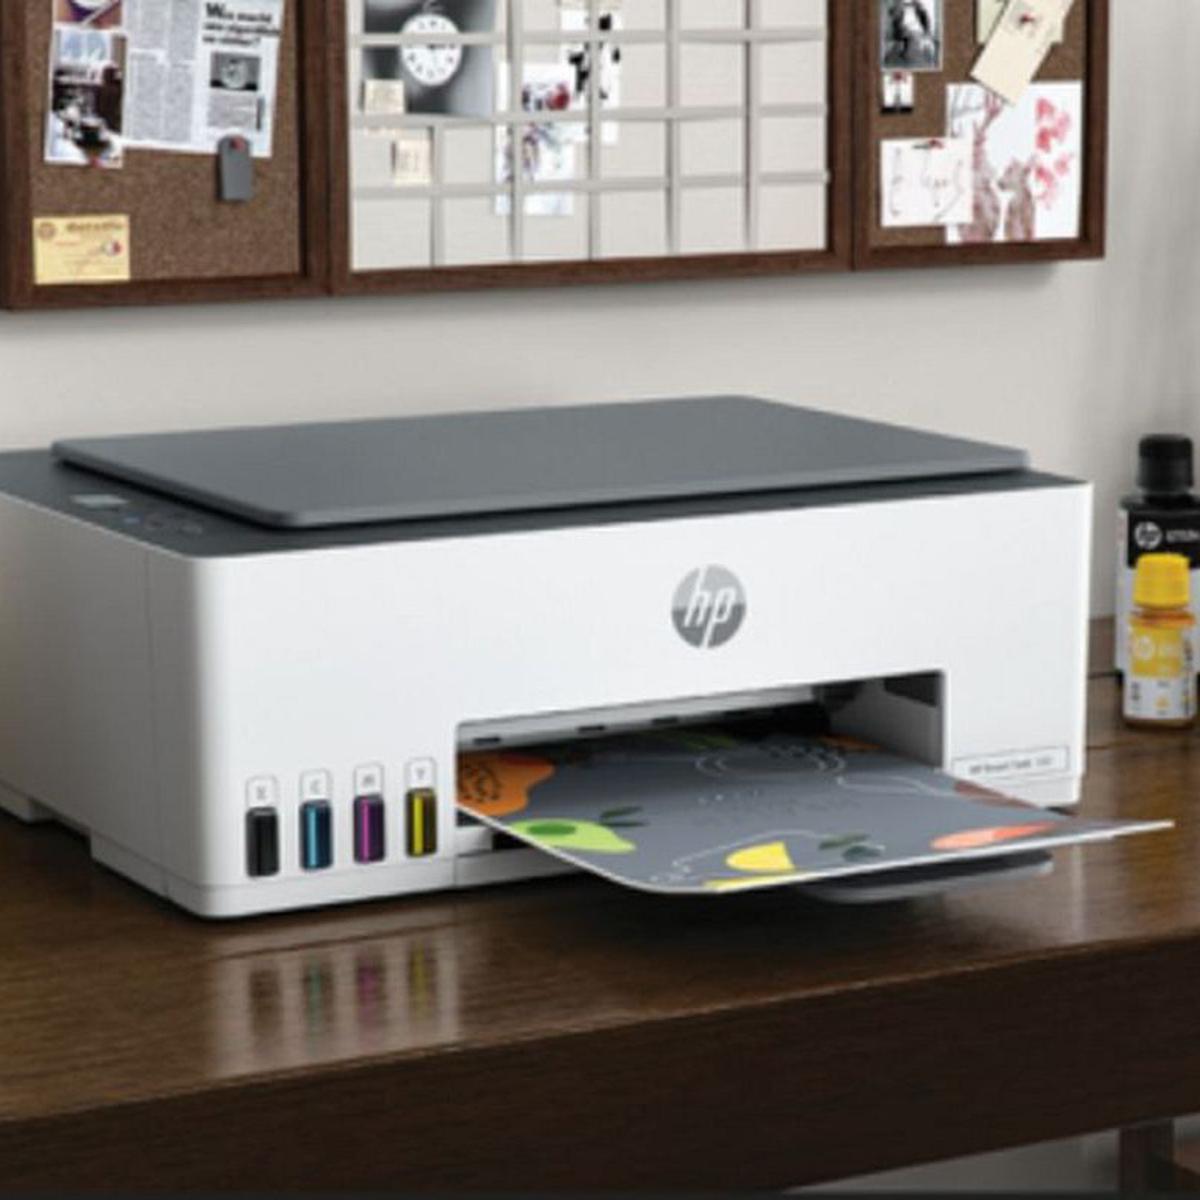 HP Smart Tank Serie 580, la impresora que te ayuda con tu sublimado casero  en prendas, Tecnología, nnda, nnni, DATA